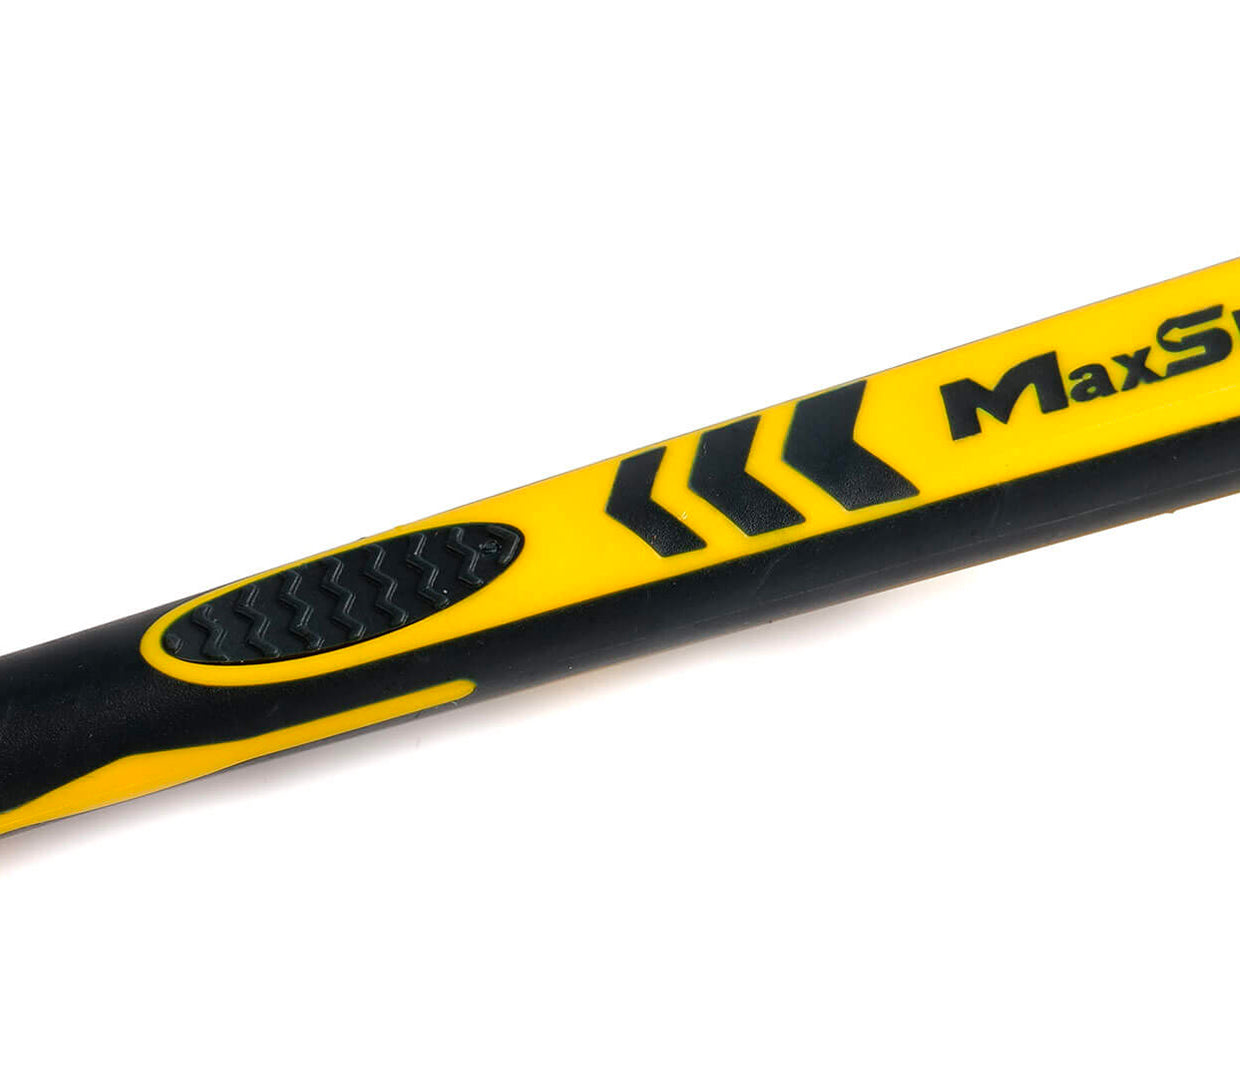 Maxshine Detailing Brush - White 14mm